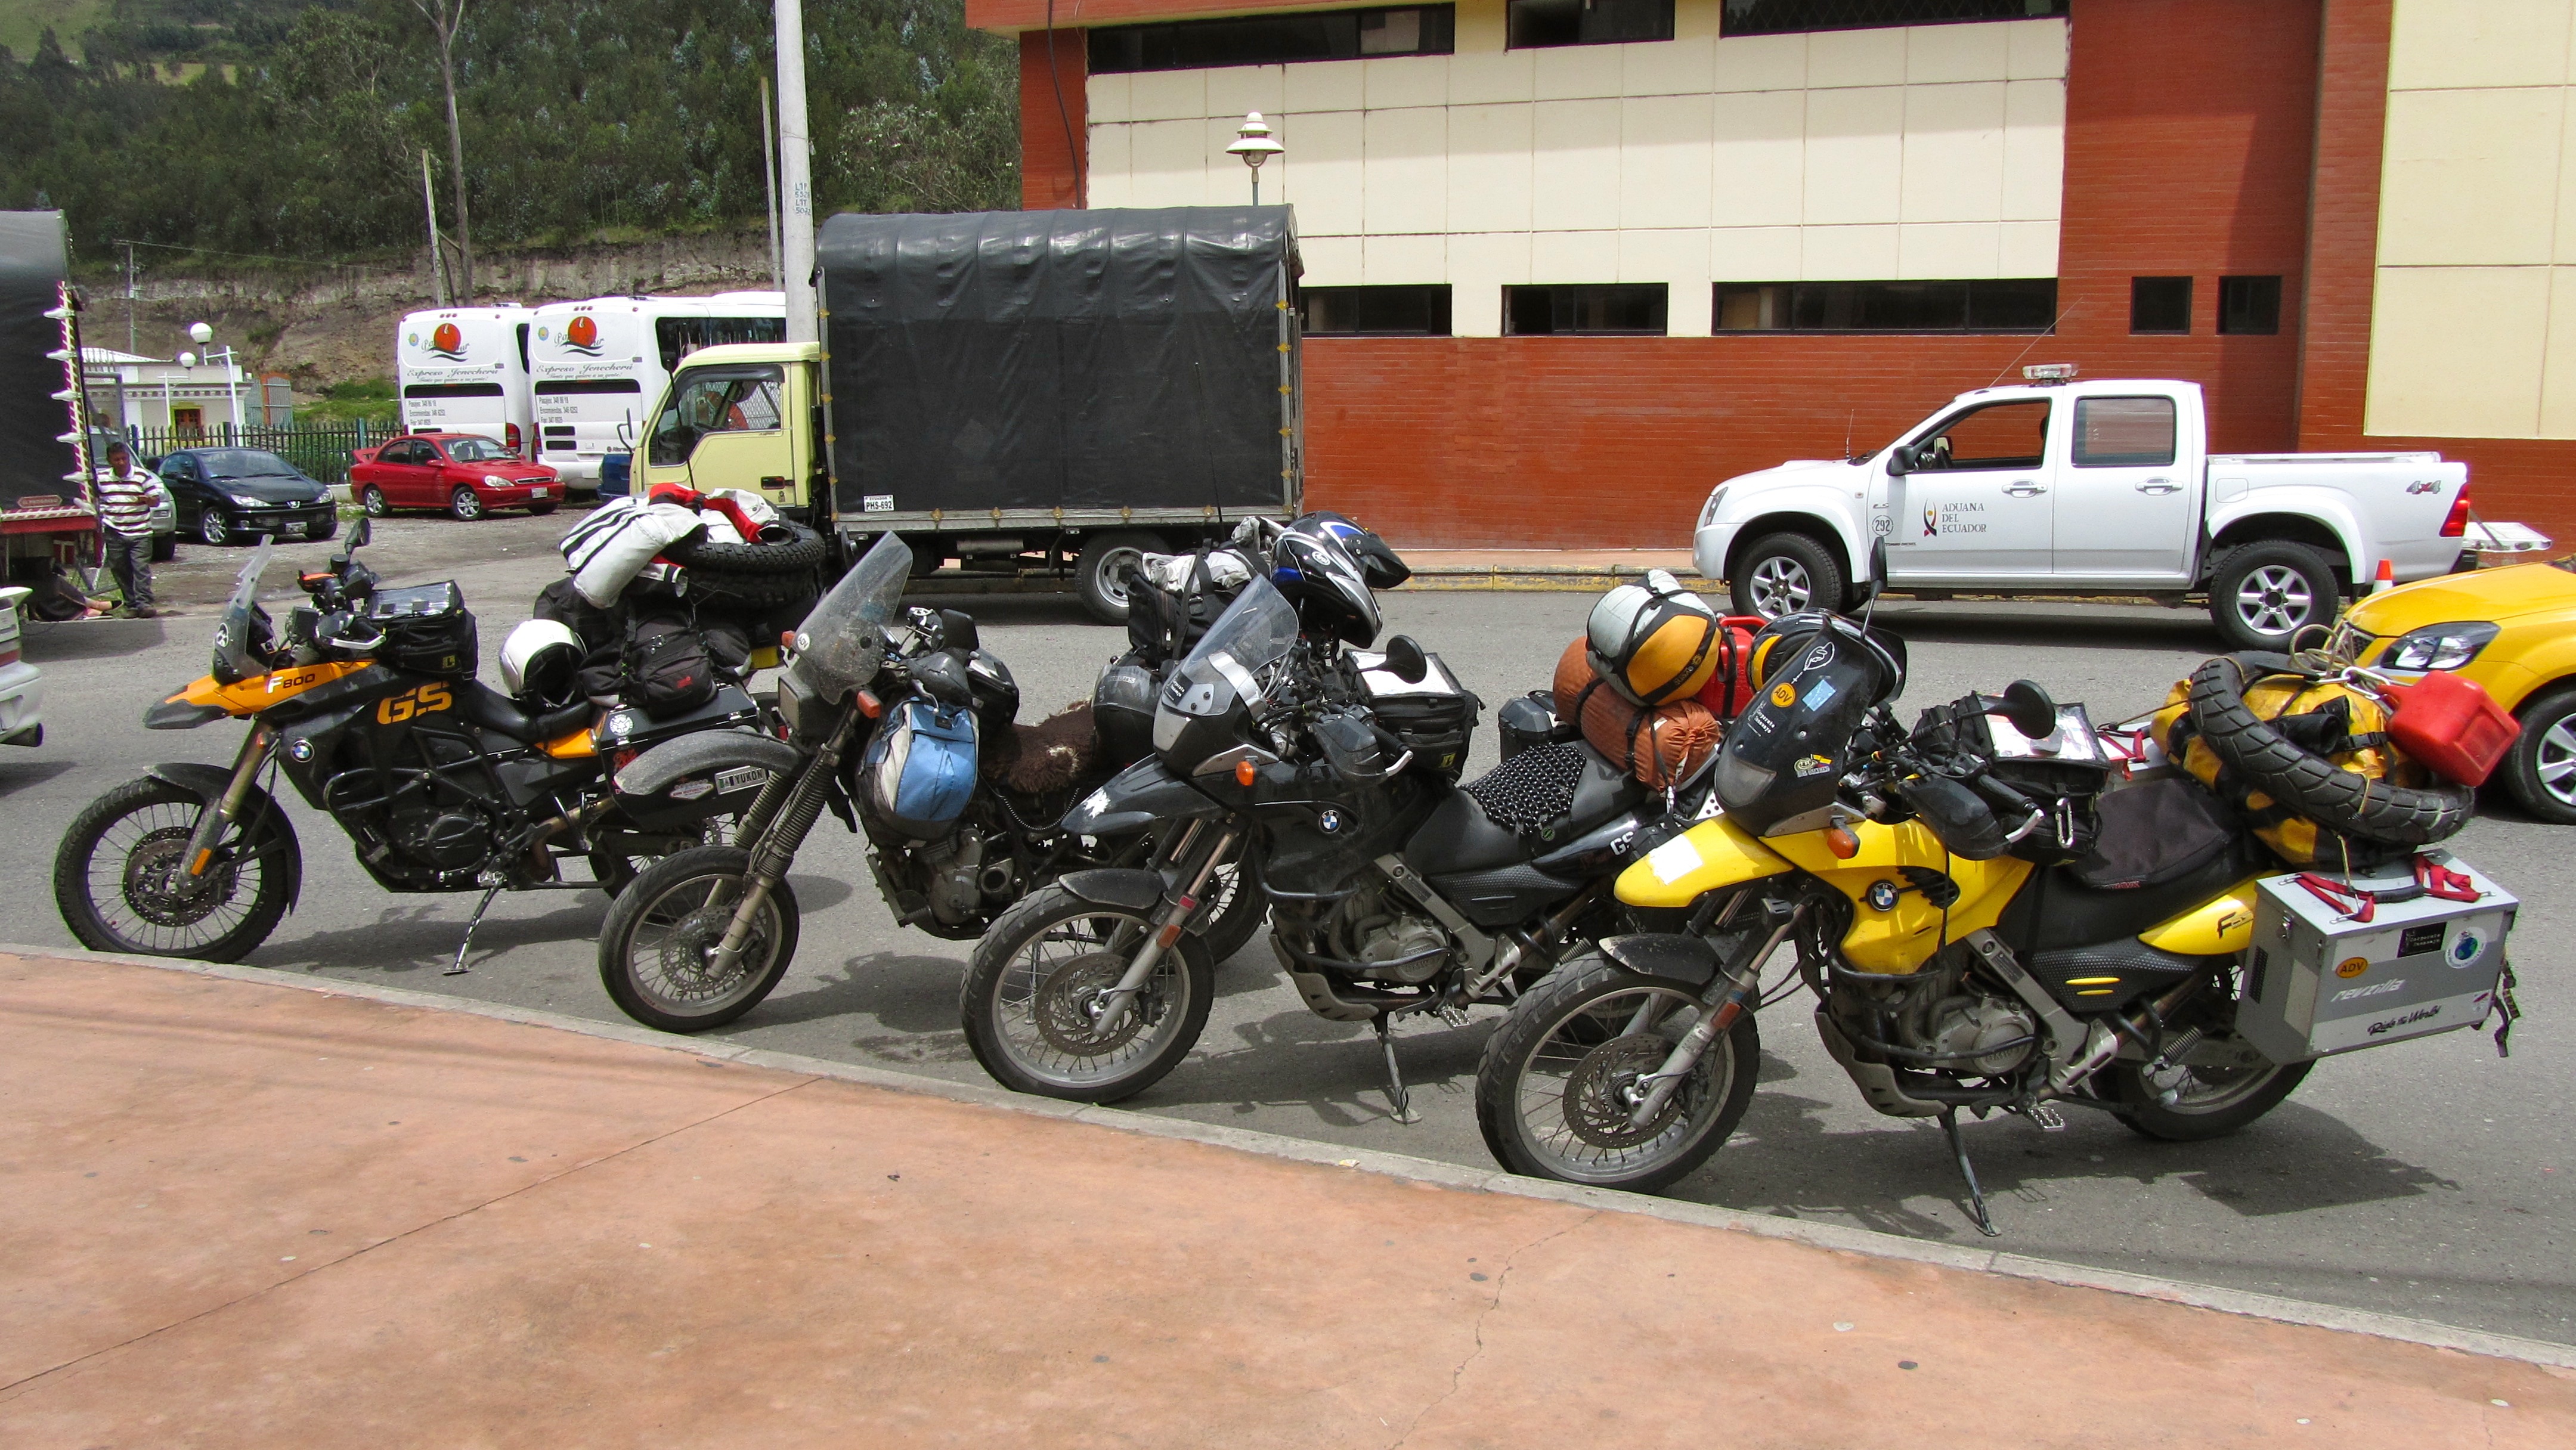 The bikes at the Ecuadoran Border